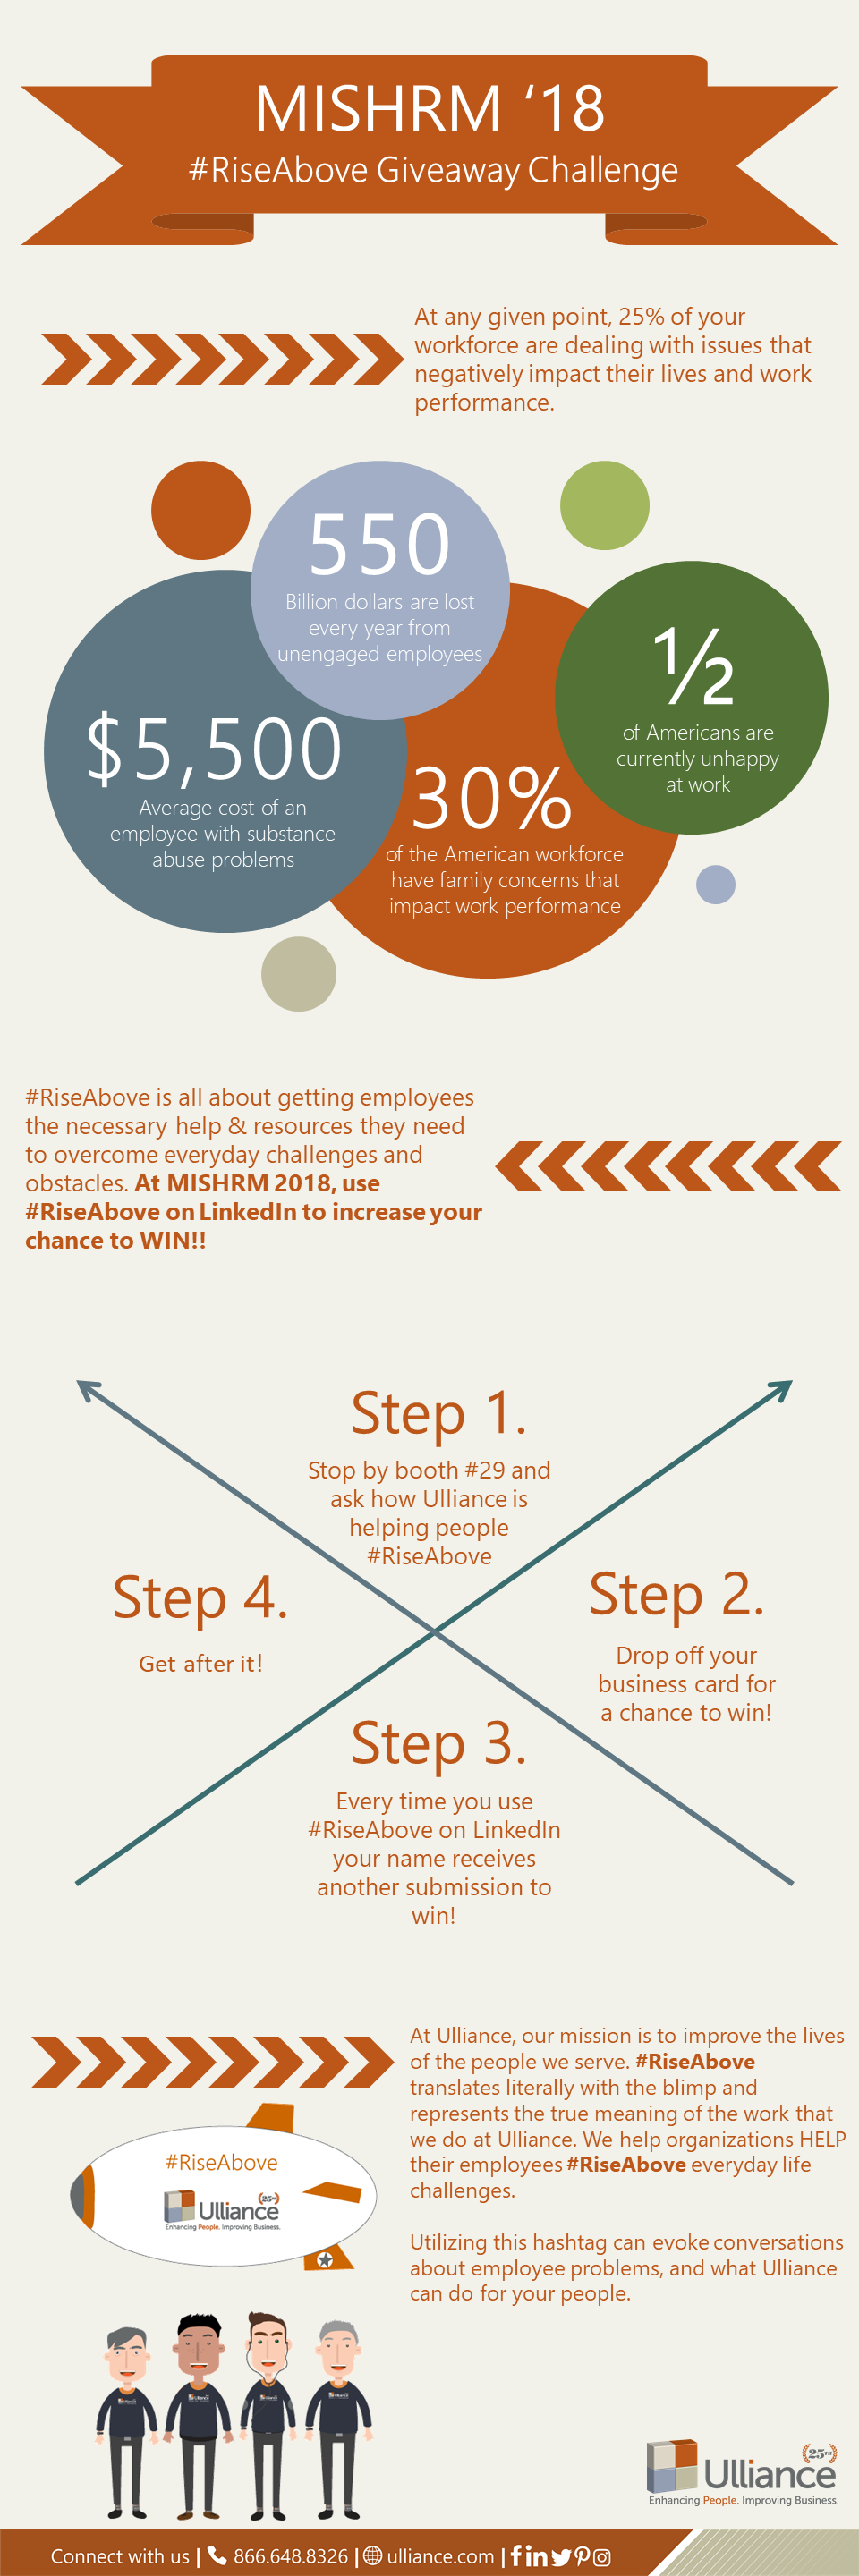 MISHRM Giveaway Challenge Infographic